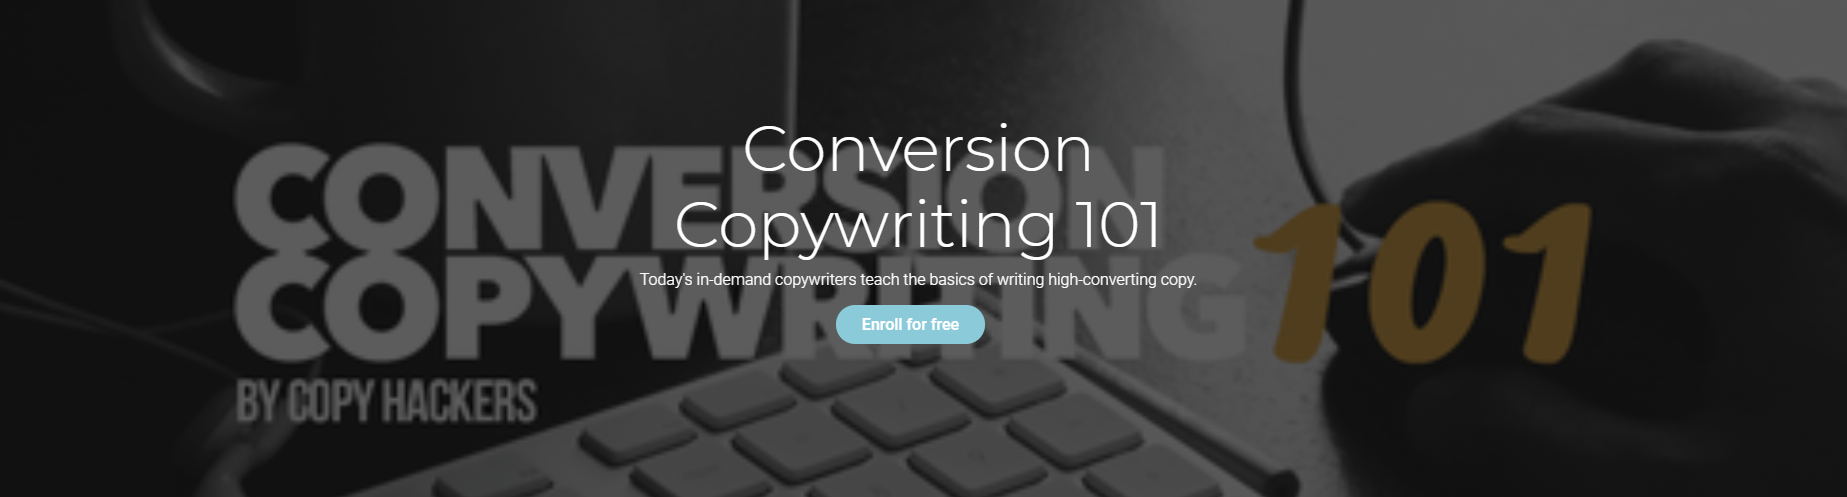 Conversion Copywriting 101 2